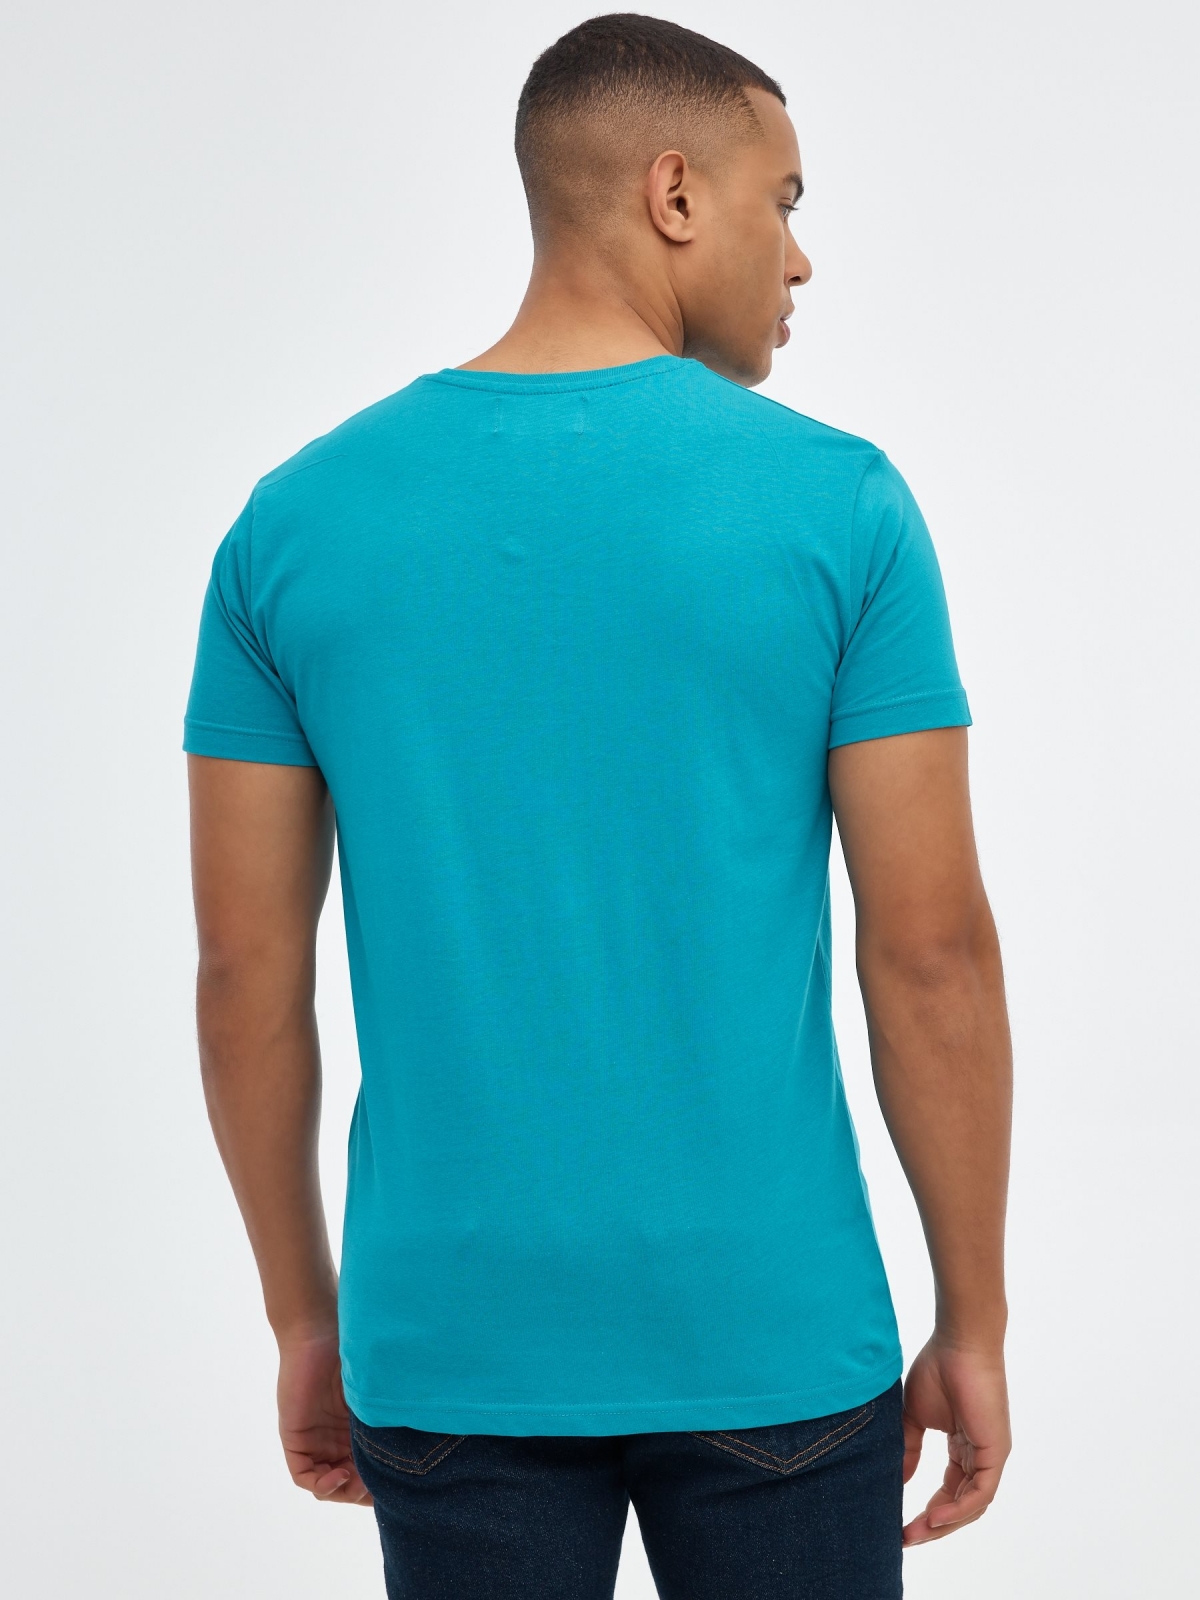 INSIDE basic T-shirt blue middle back view